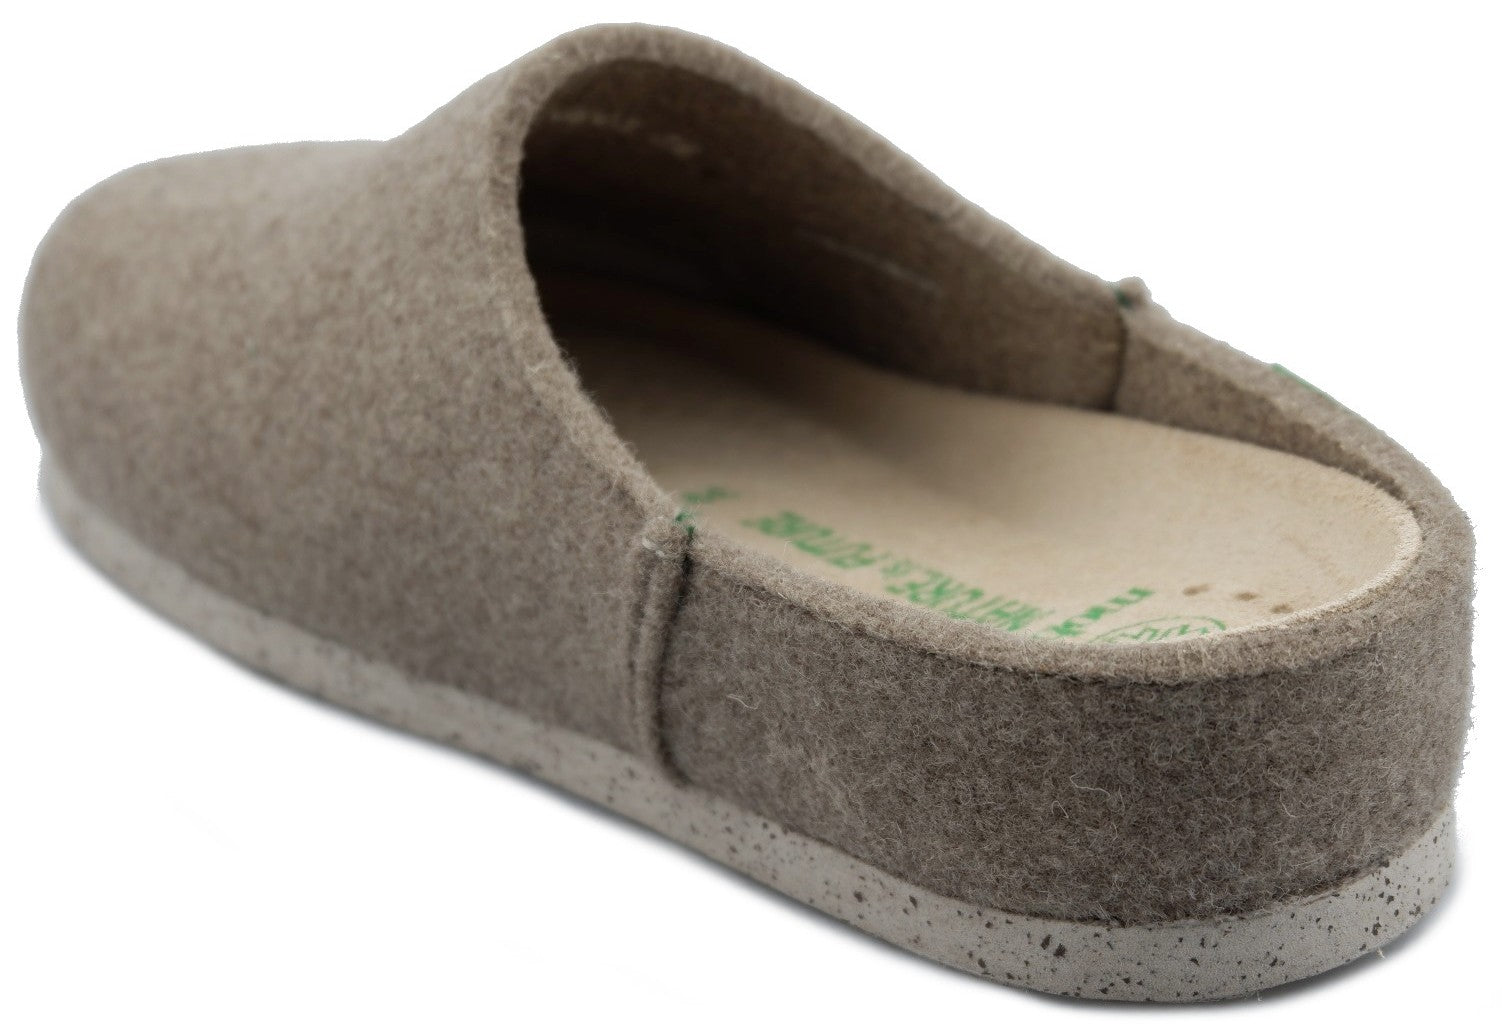 Mephisto PADDI sandal/clog for men - warm grey - felt - ChaplinshoesMephisto PADDI sandal/clog for men - warm grey - feltMephisto